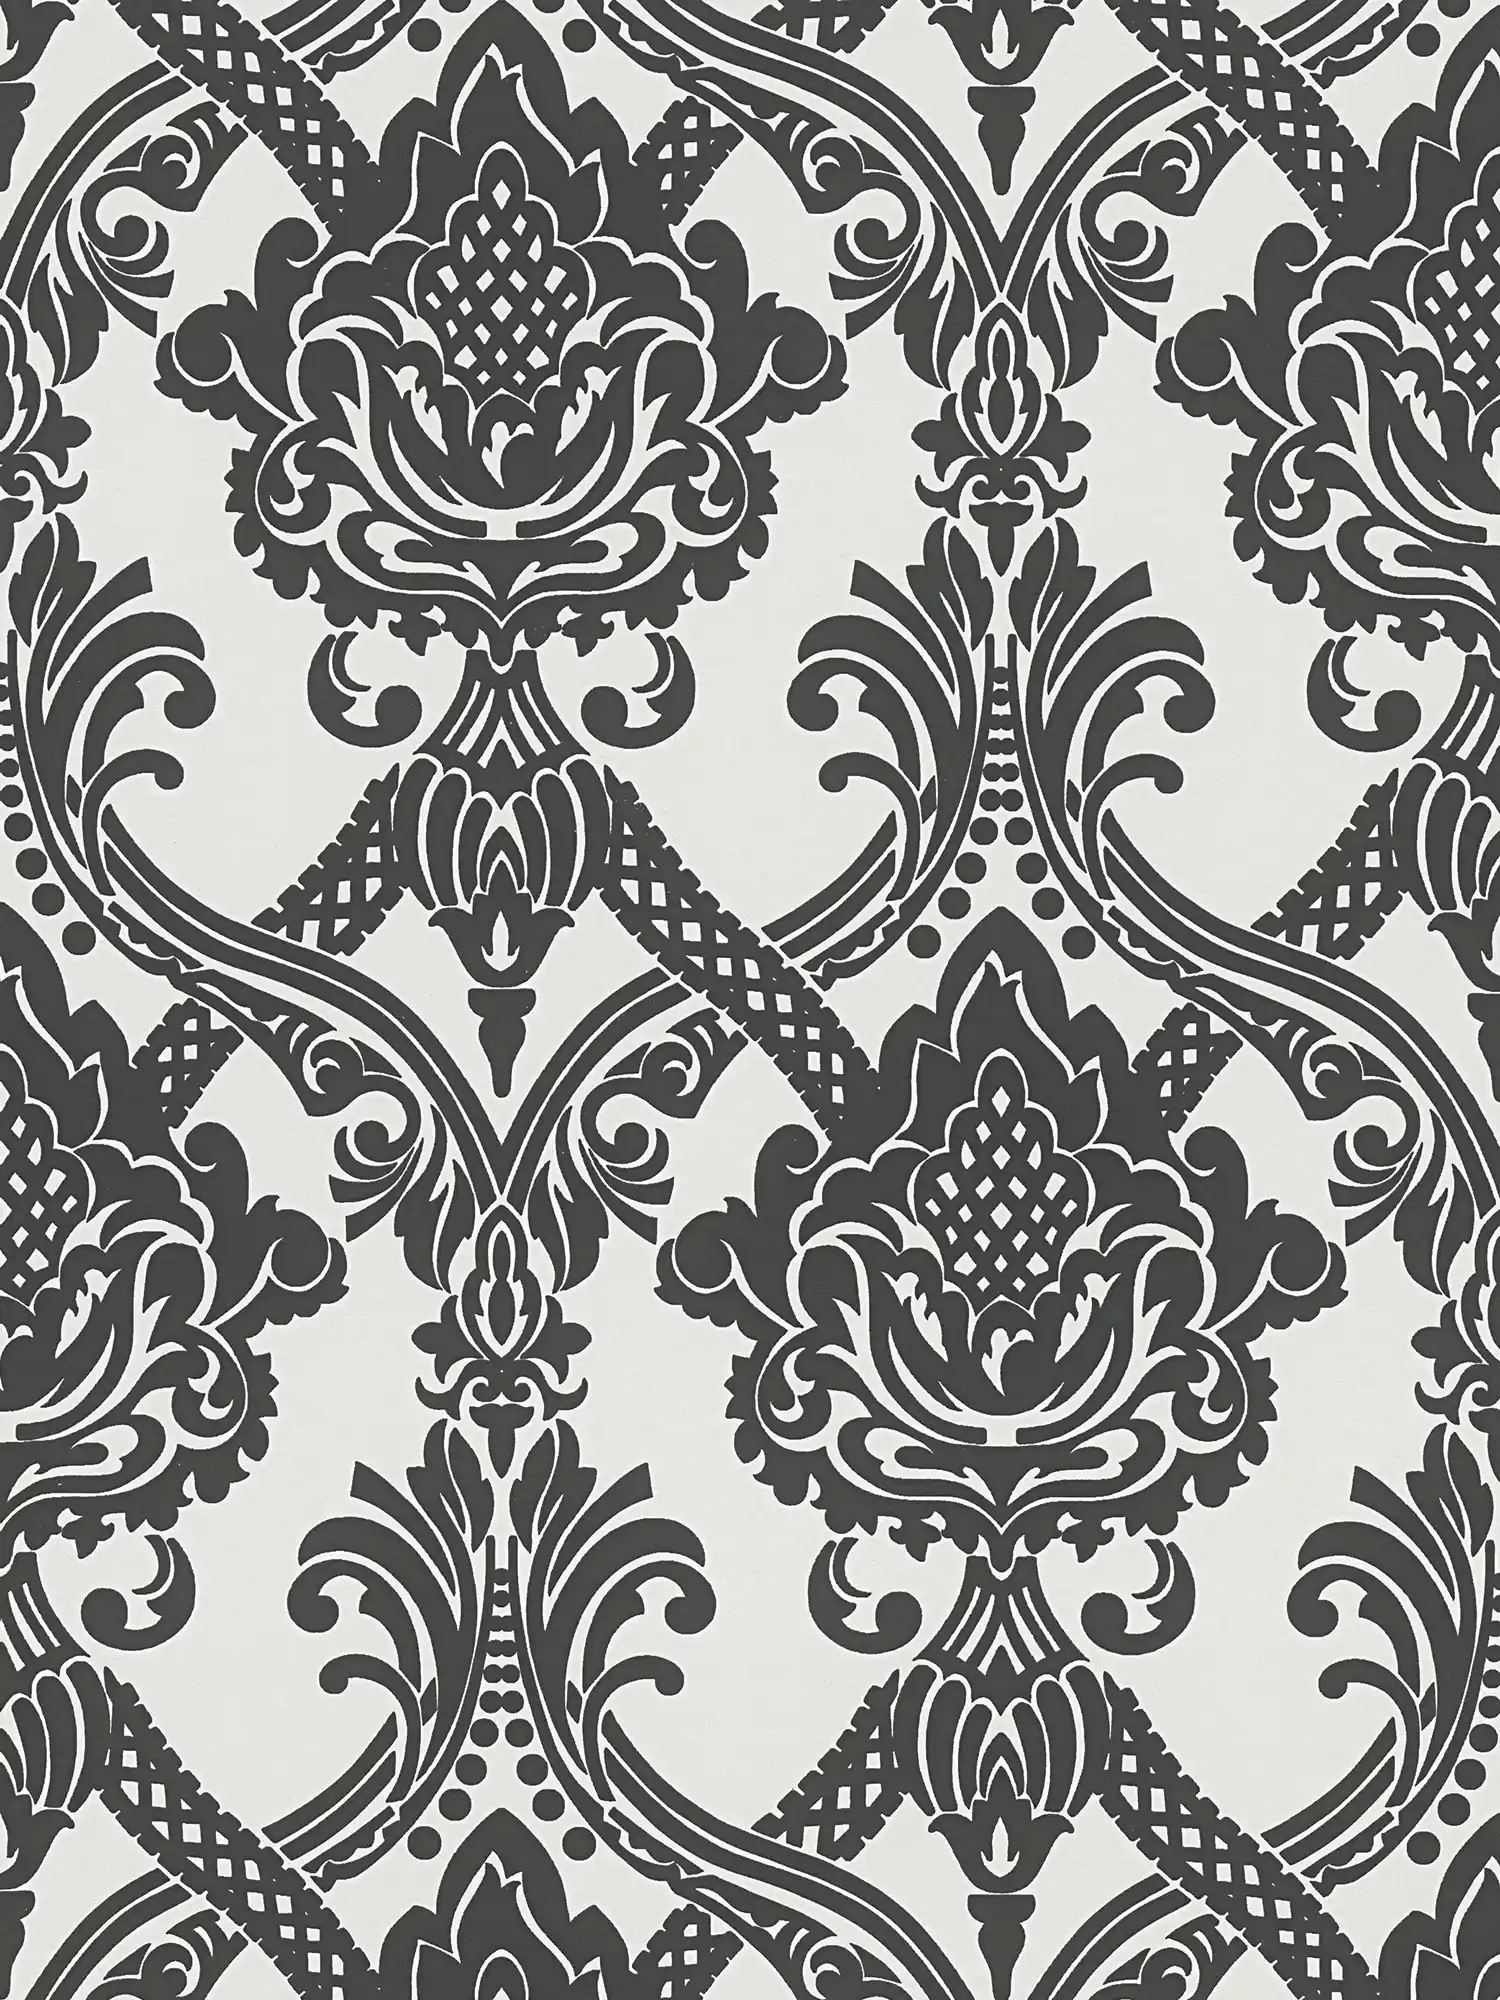 Metallic wallpaper baroque ornamental pattern in black and white
